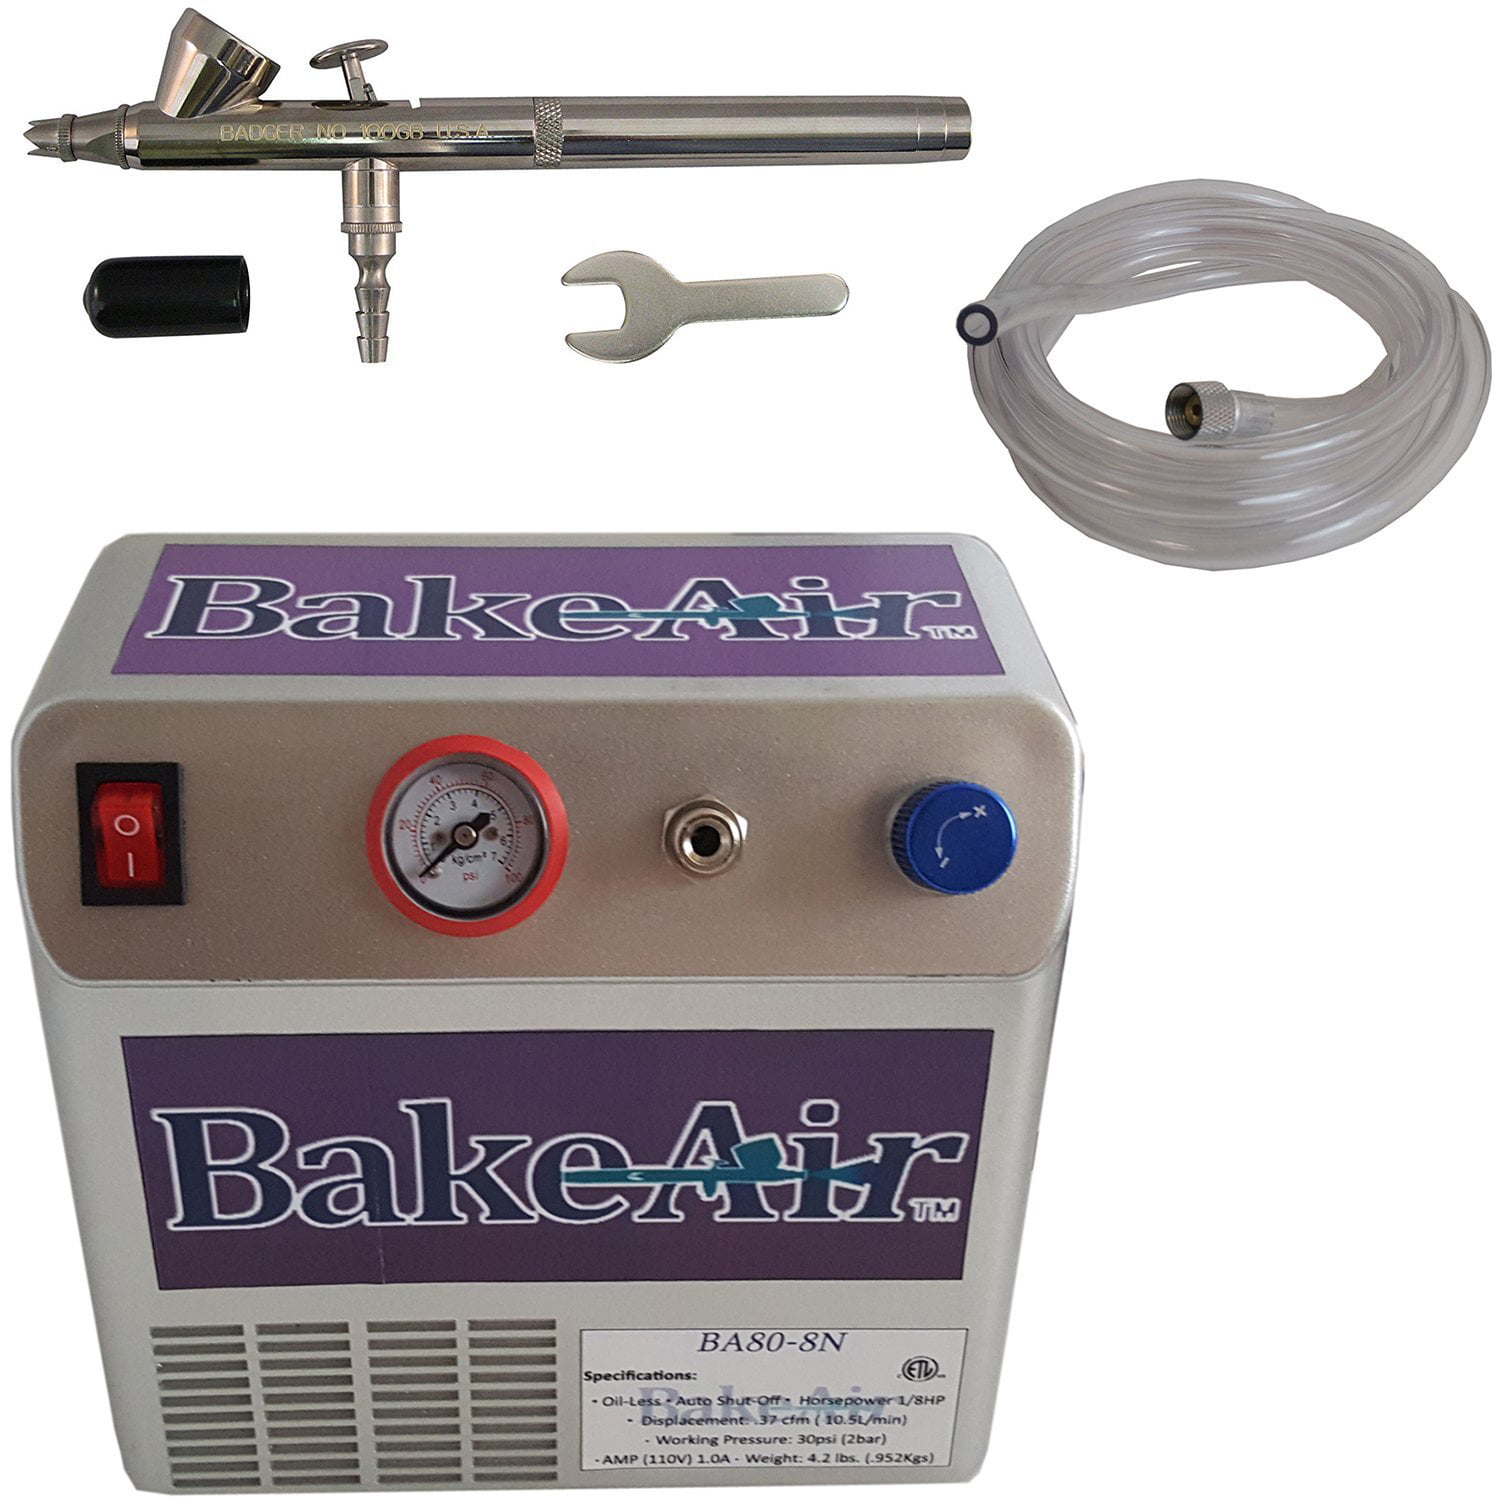 Badger Air-Brush Ba80-3n Air Compressor Bakery Model 110V